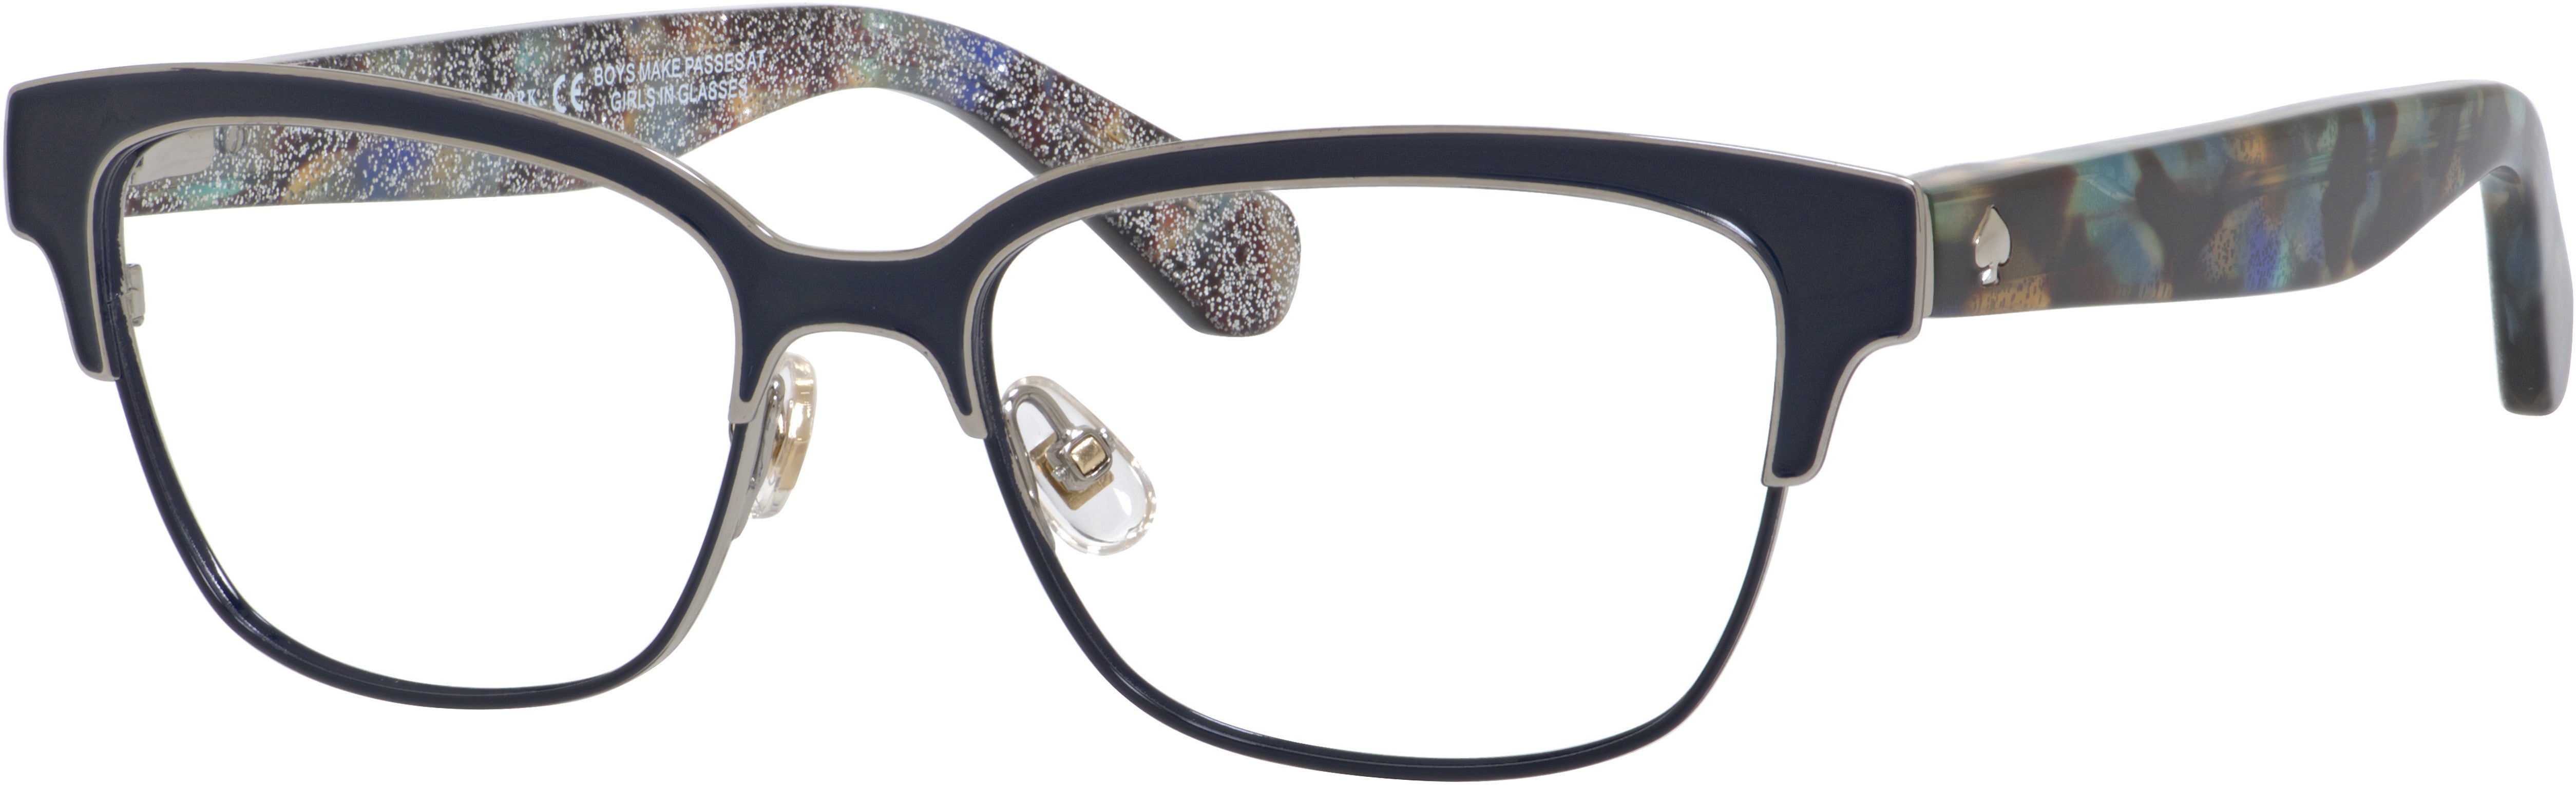 Kate Spade Ladonna Rectangular Eyeglasses 0S61-0S61  Blue Havana Glitter (00 Demo Lens)